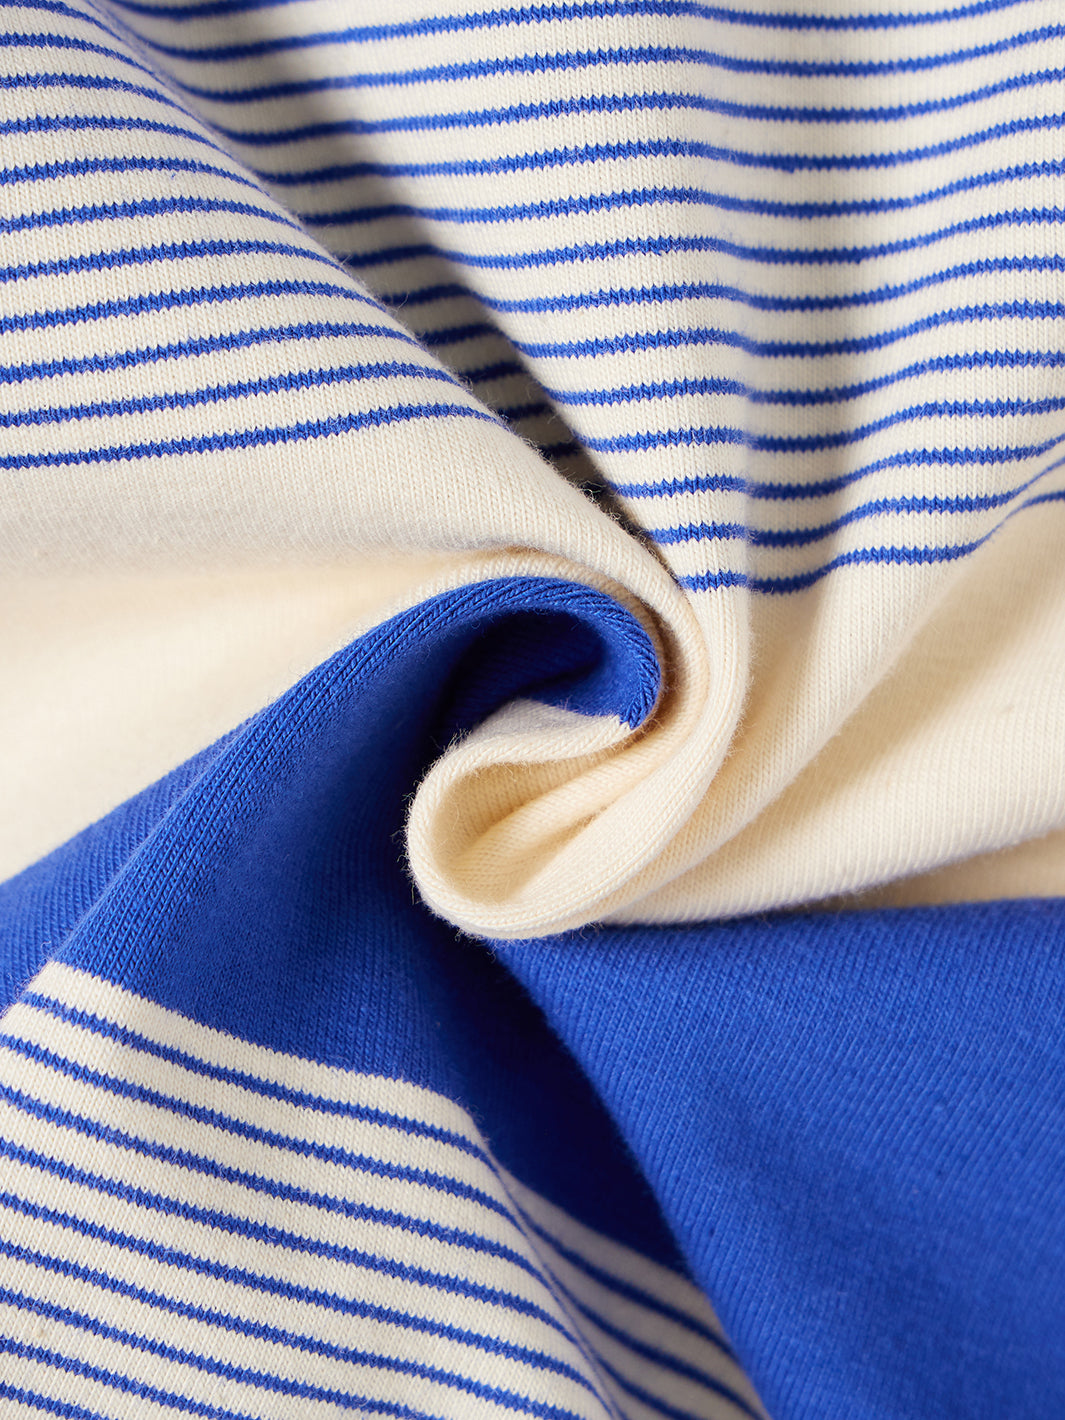 Stripe Long Sleeve Polo - Royal Blue/Off White